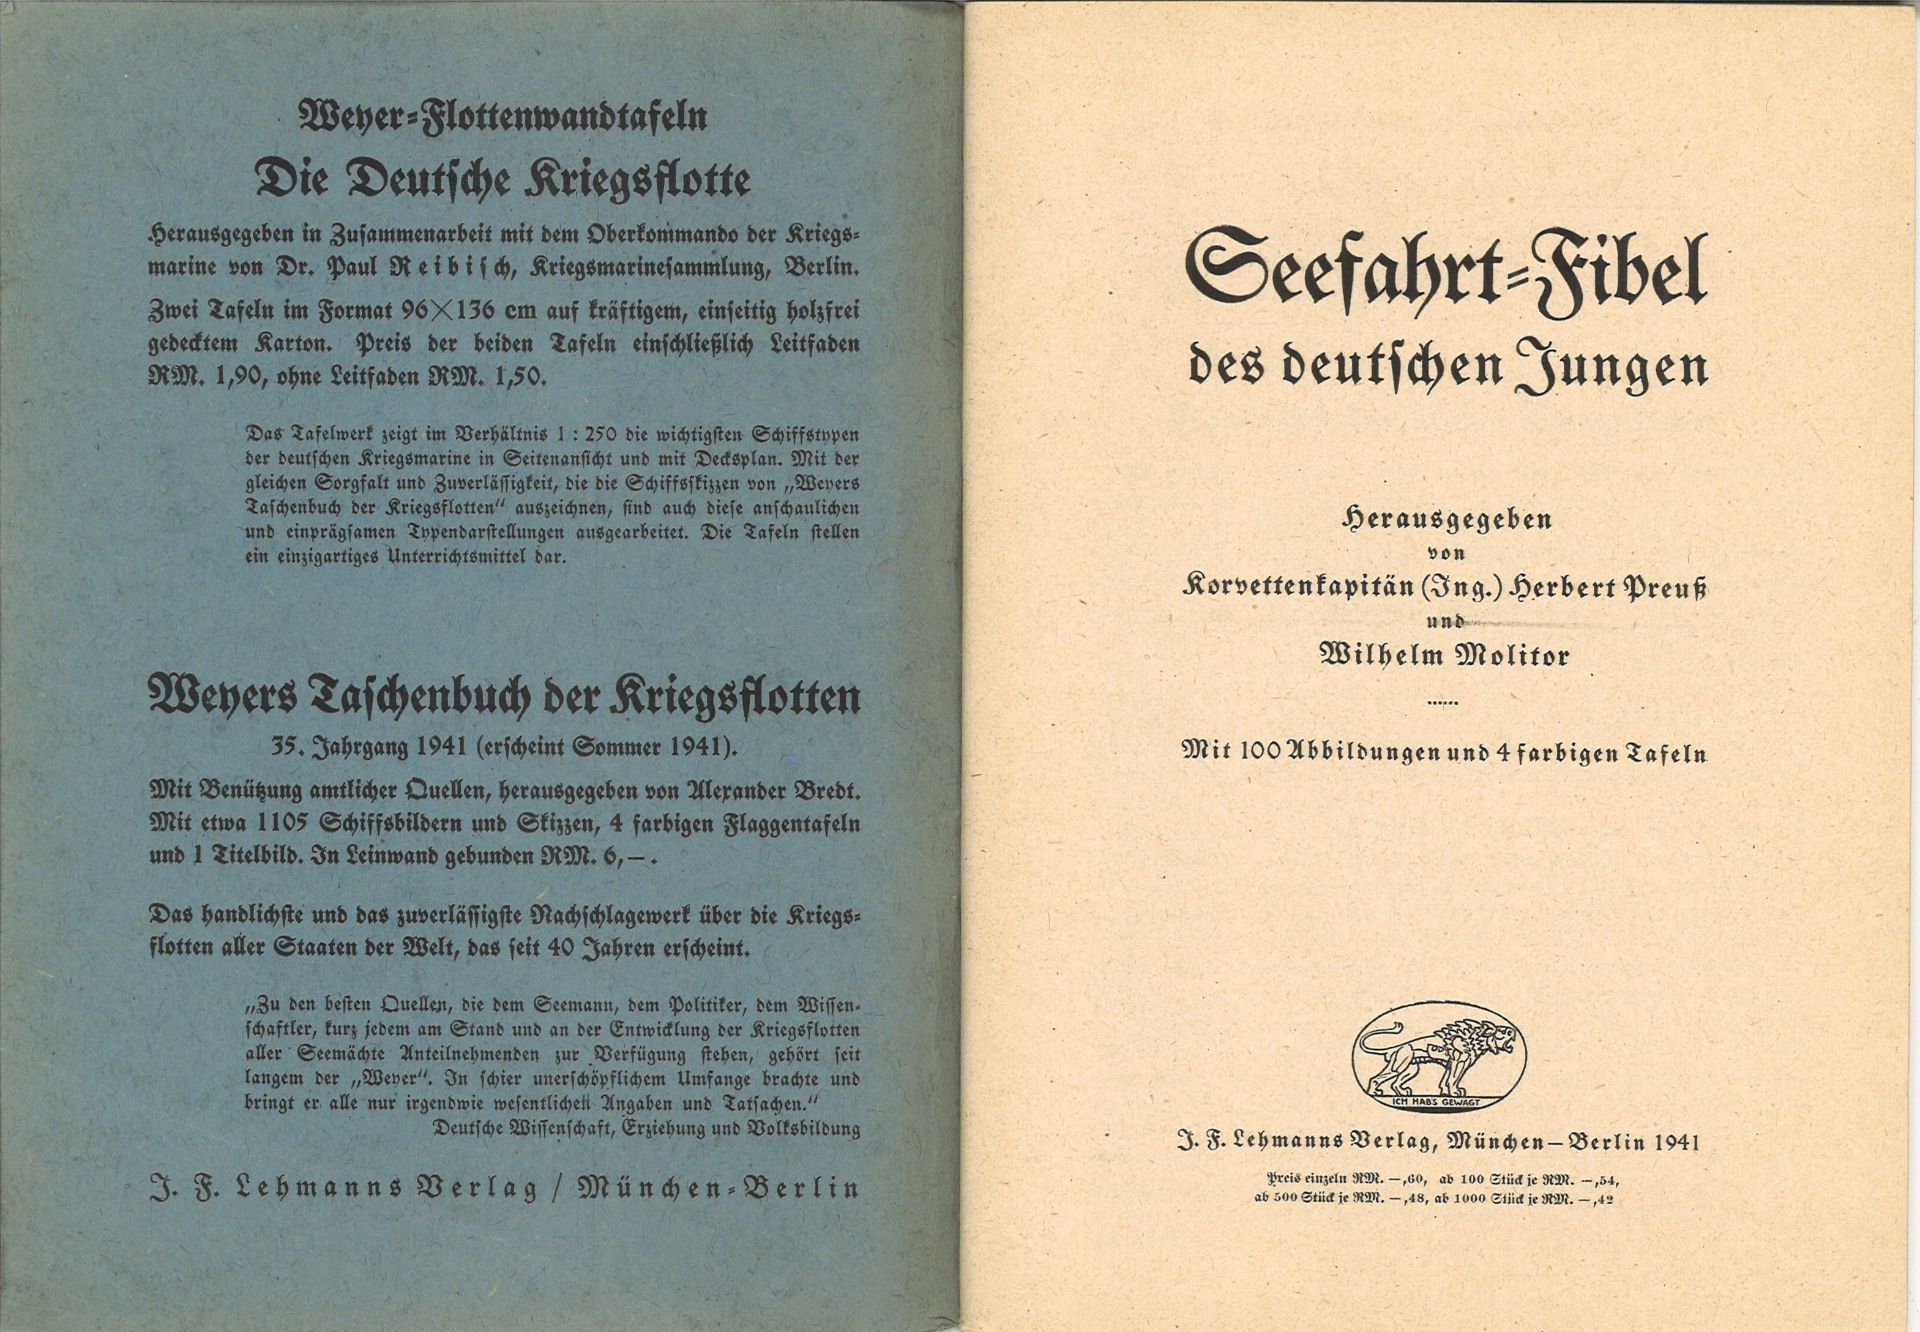 Seefahrt-Fibel des deutschen Jungen, Preuss-Molitor, J.F. Lehmanns Verlag München/Berlin, 1941, - Bild 2 aus 3